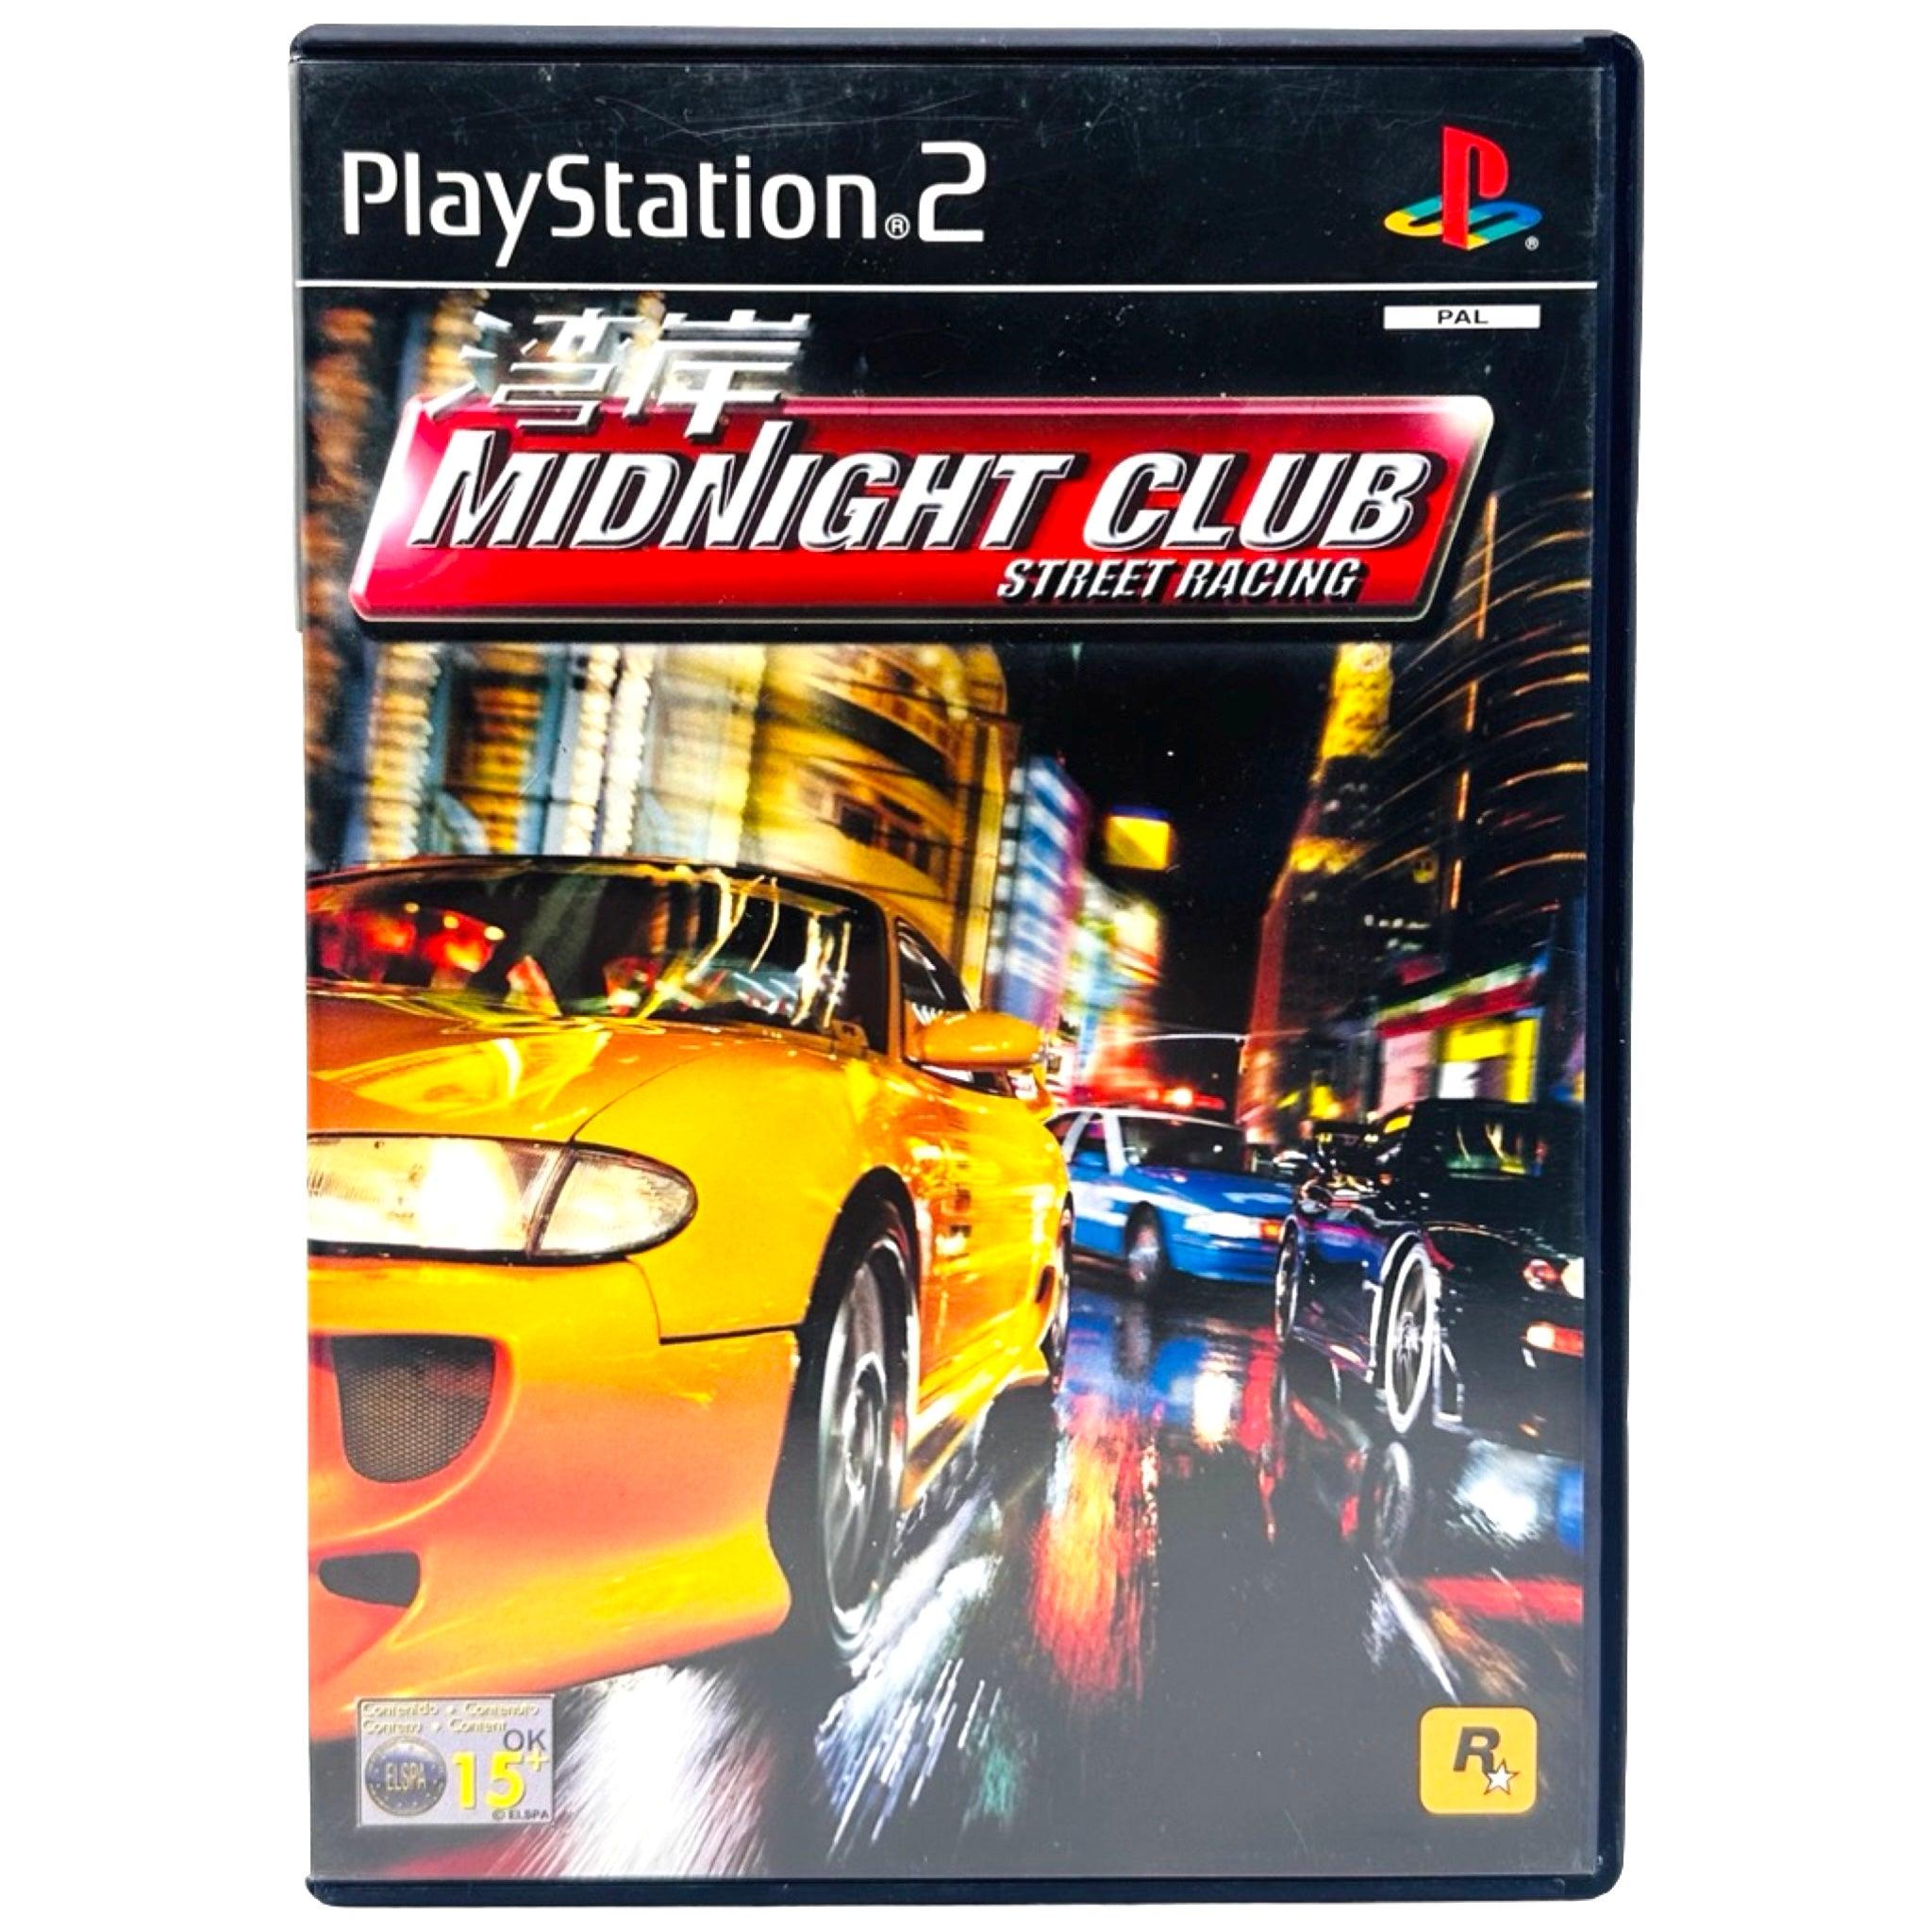 PS2: Midnight Club Street Racing - RetroGaming.no